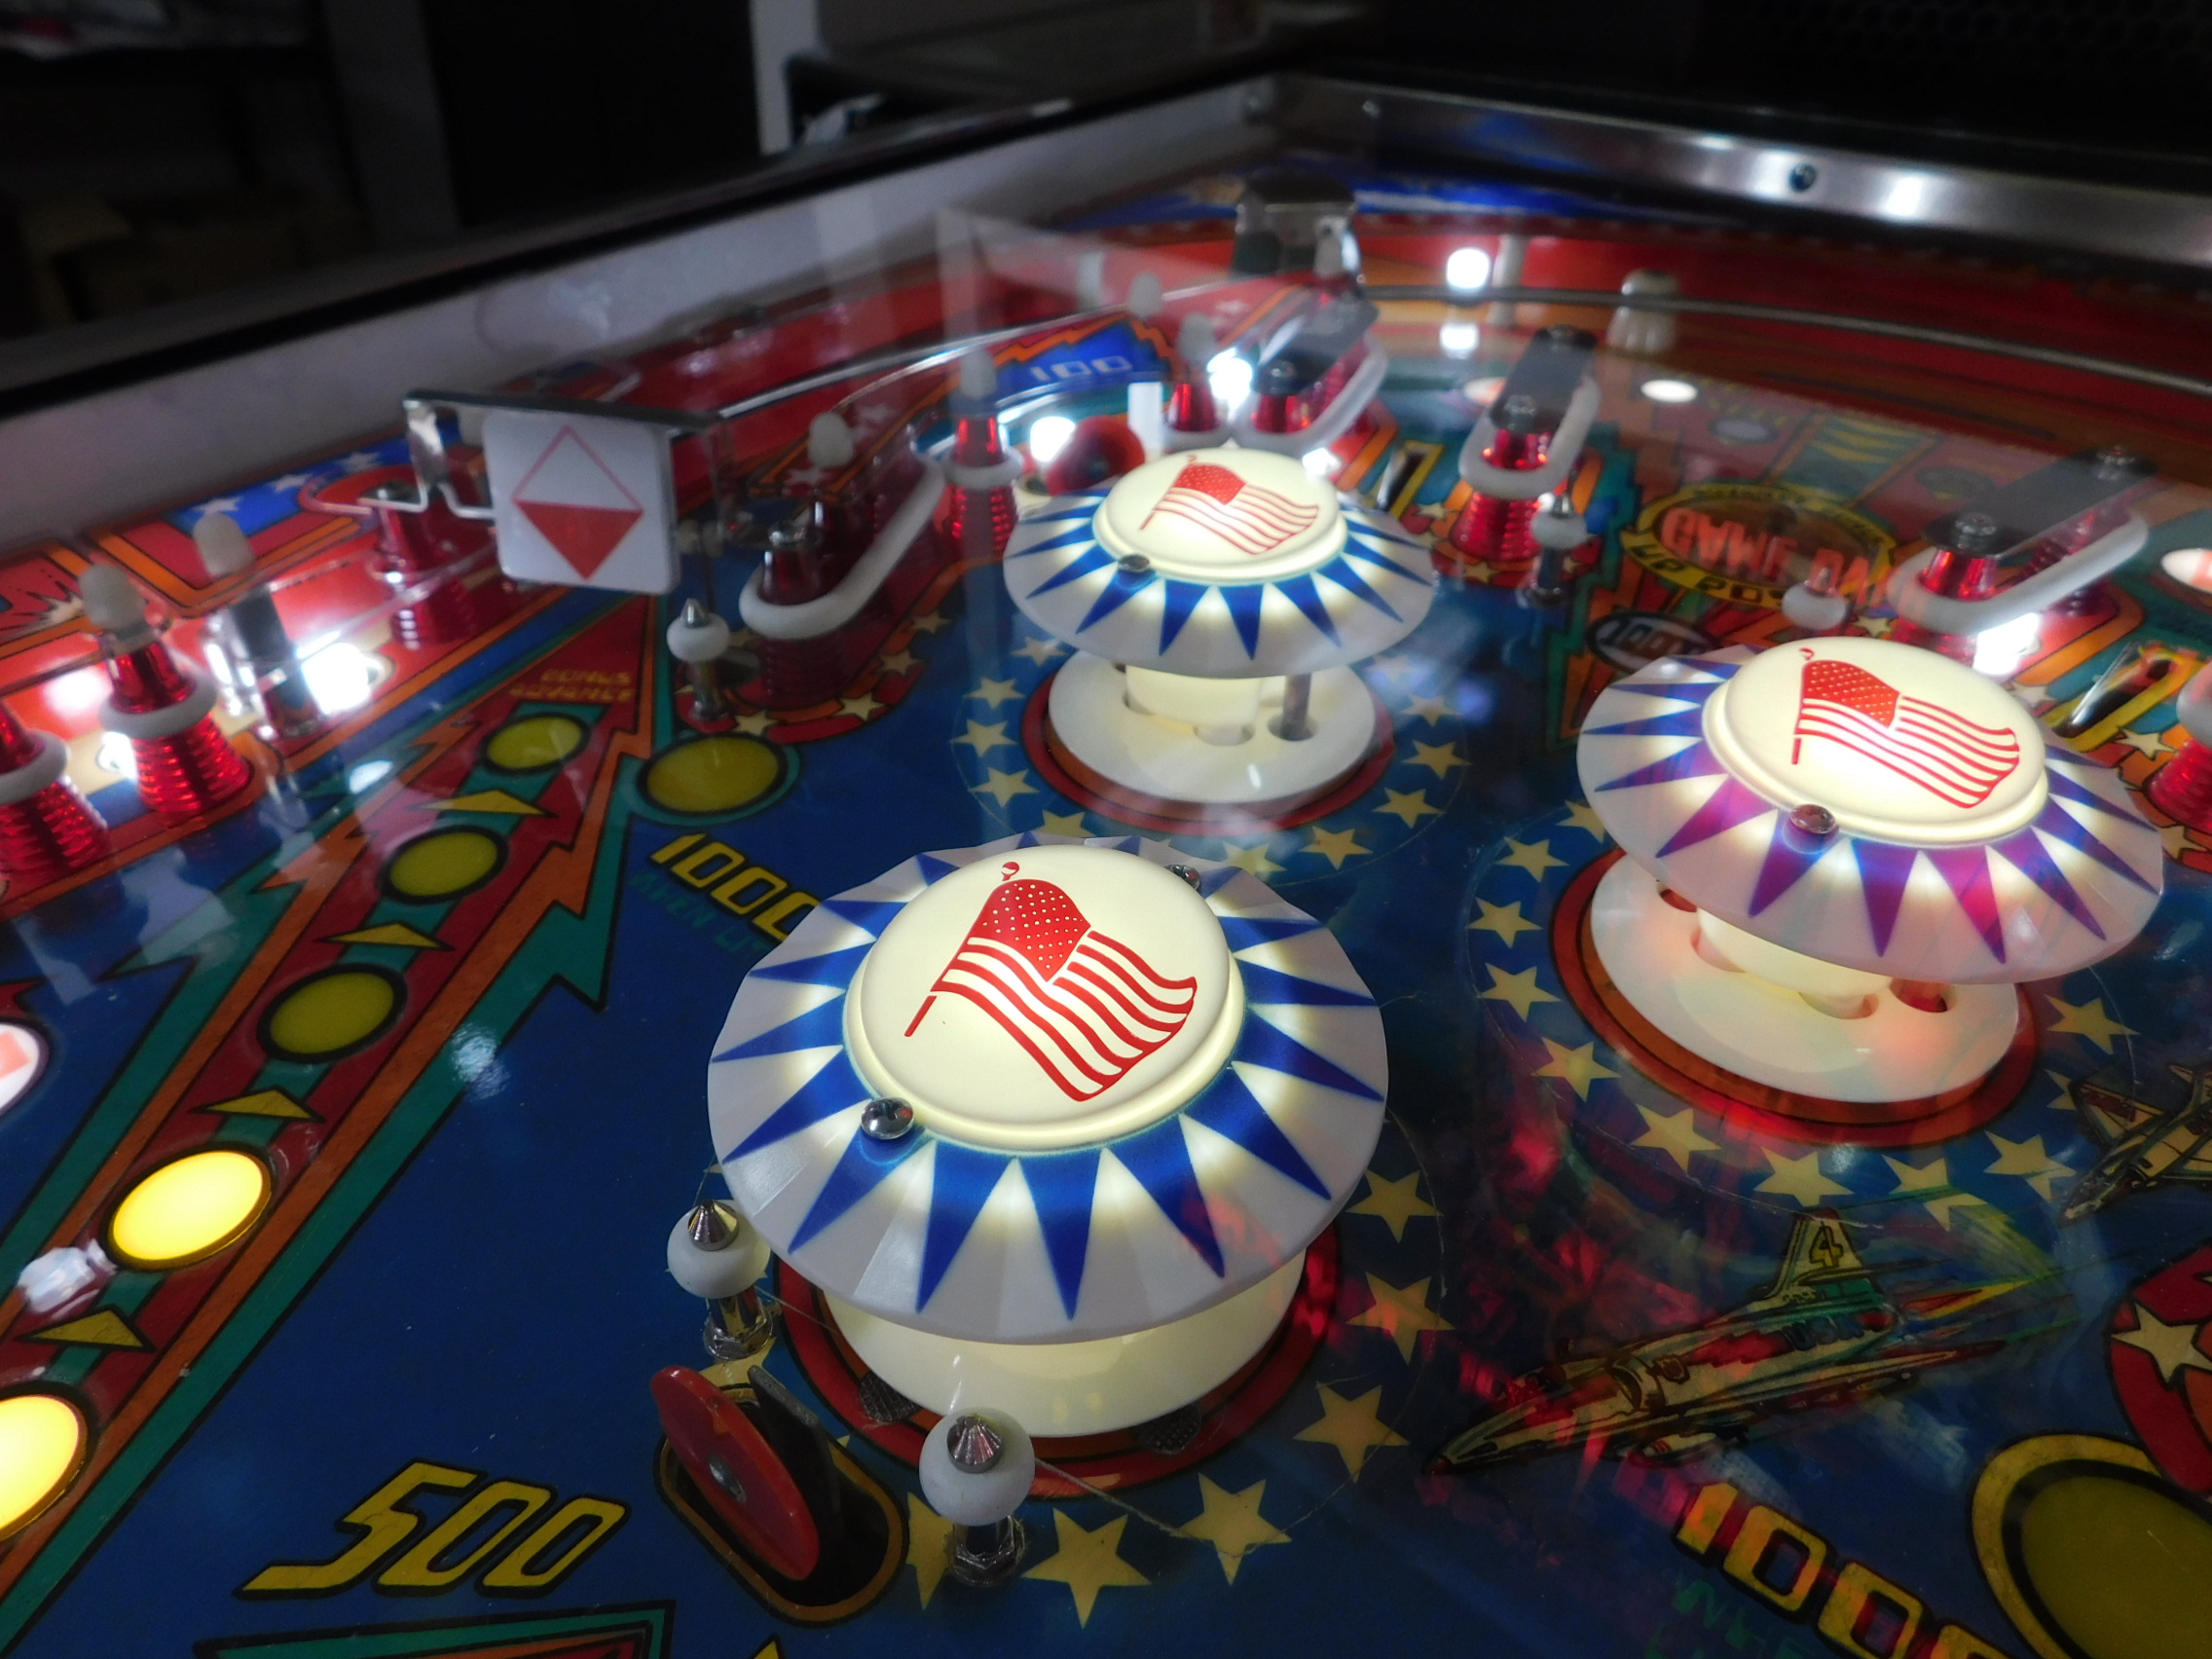 Pinball Restorations, Bally Six Million Dollar Man